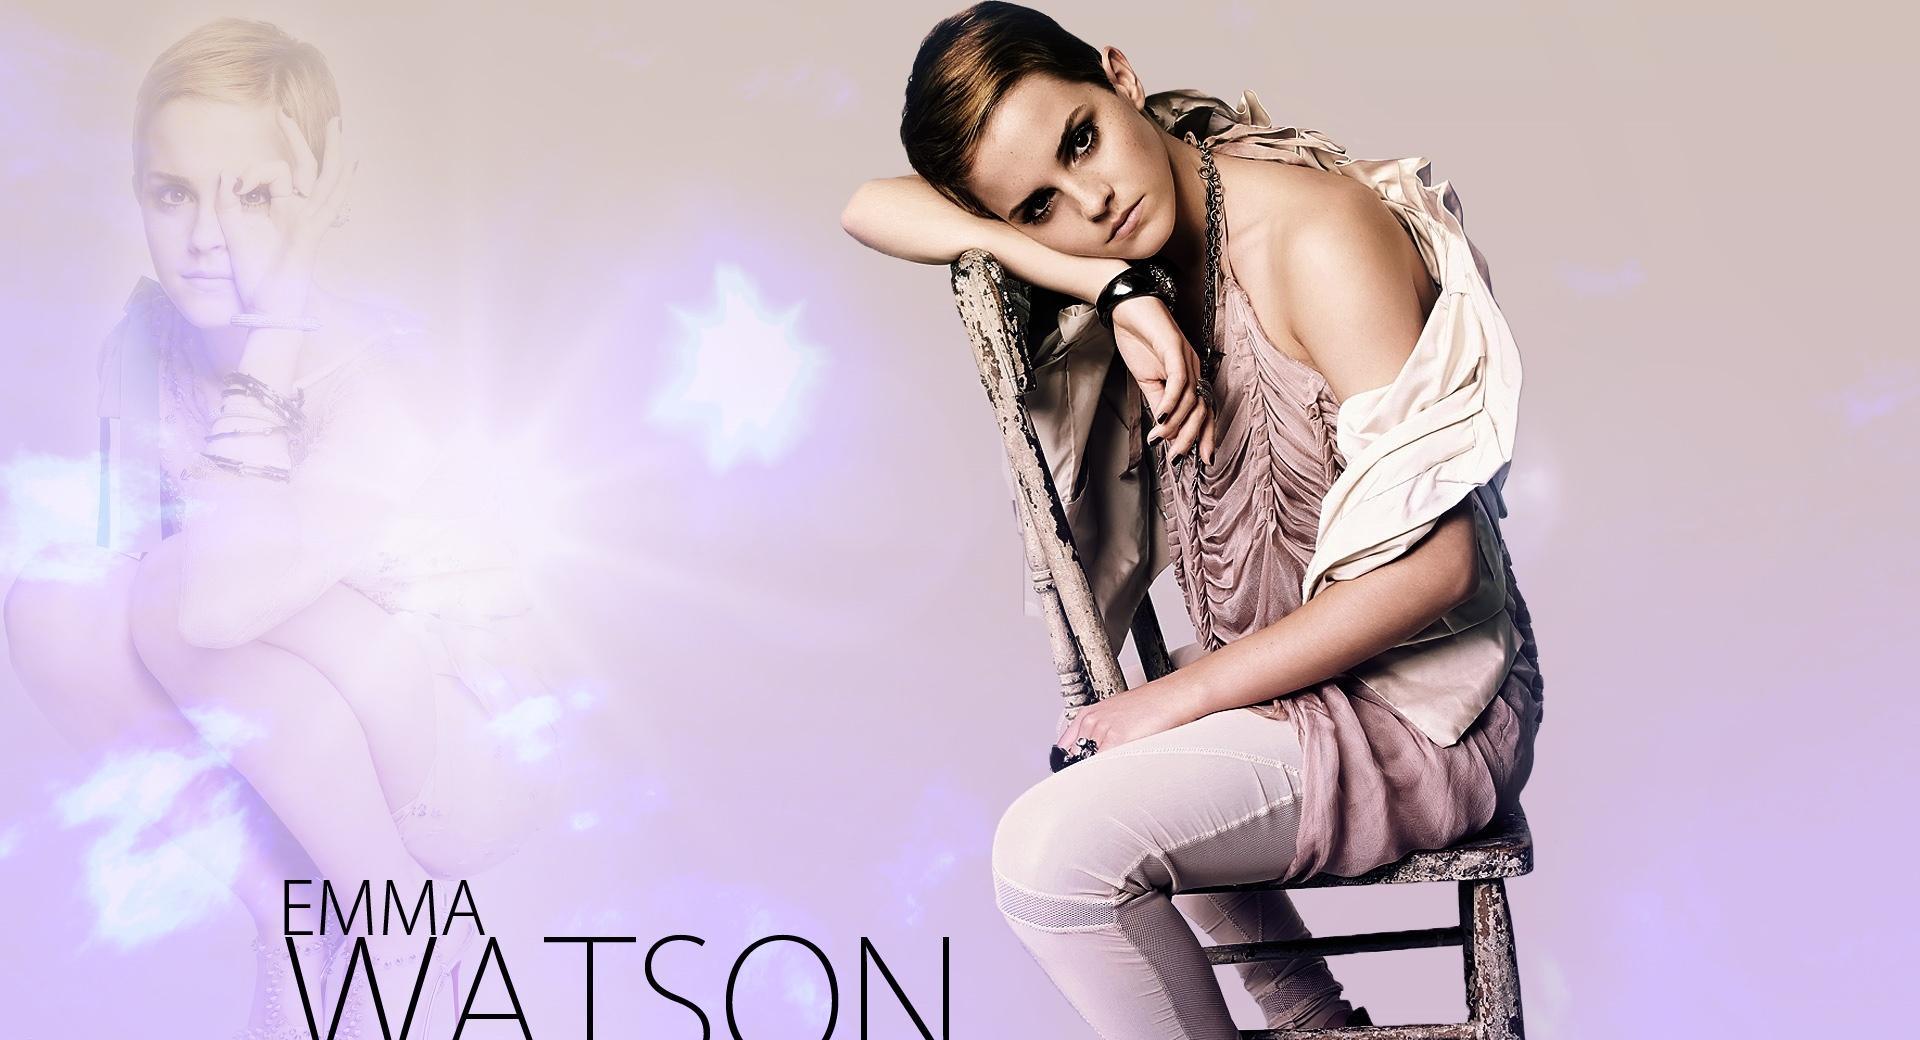 New Emma Watson 2011 at 2048 x 2048 iPad size wallpapers HD quality